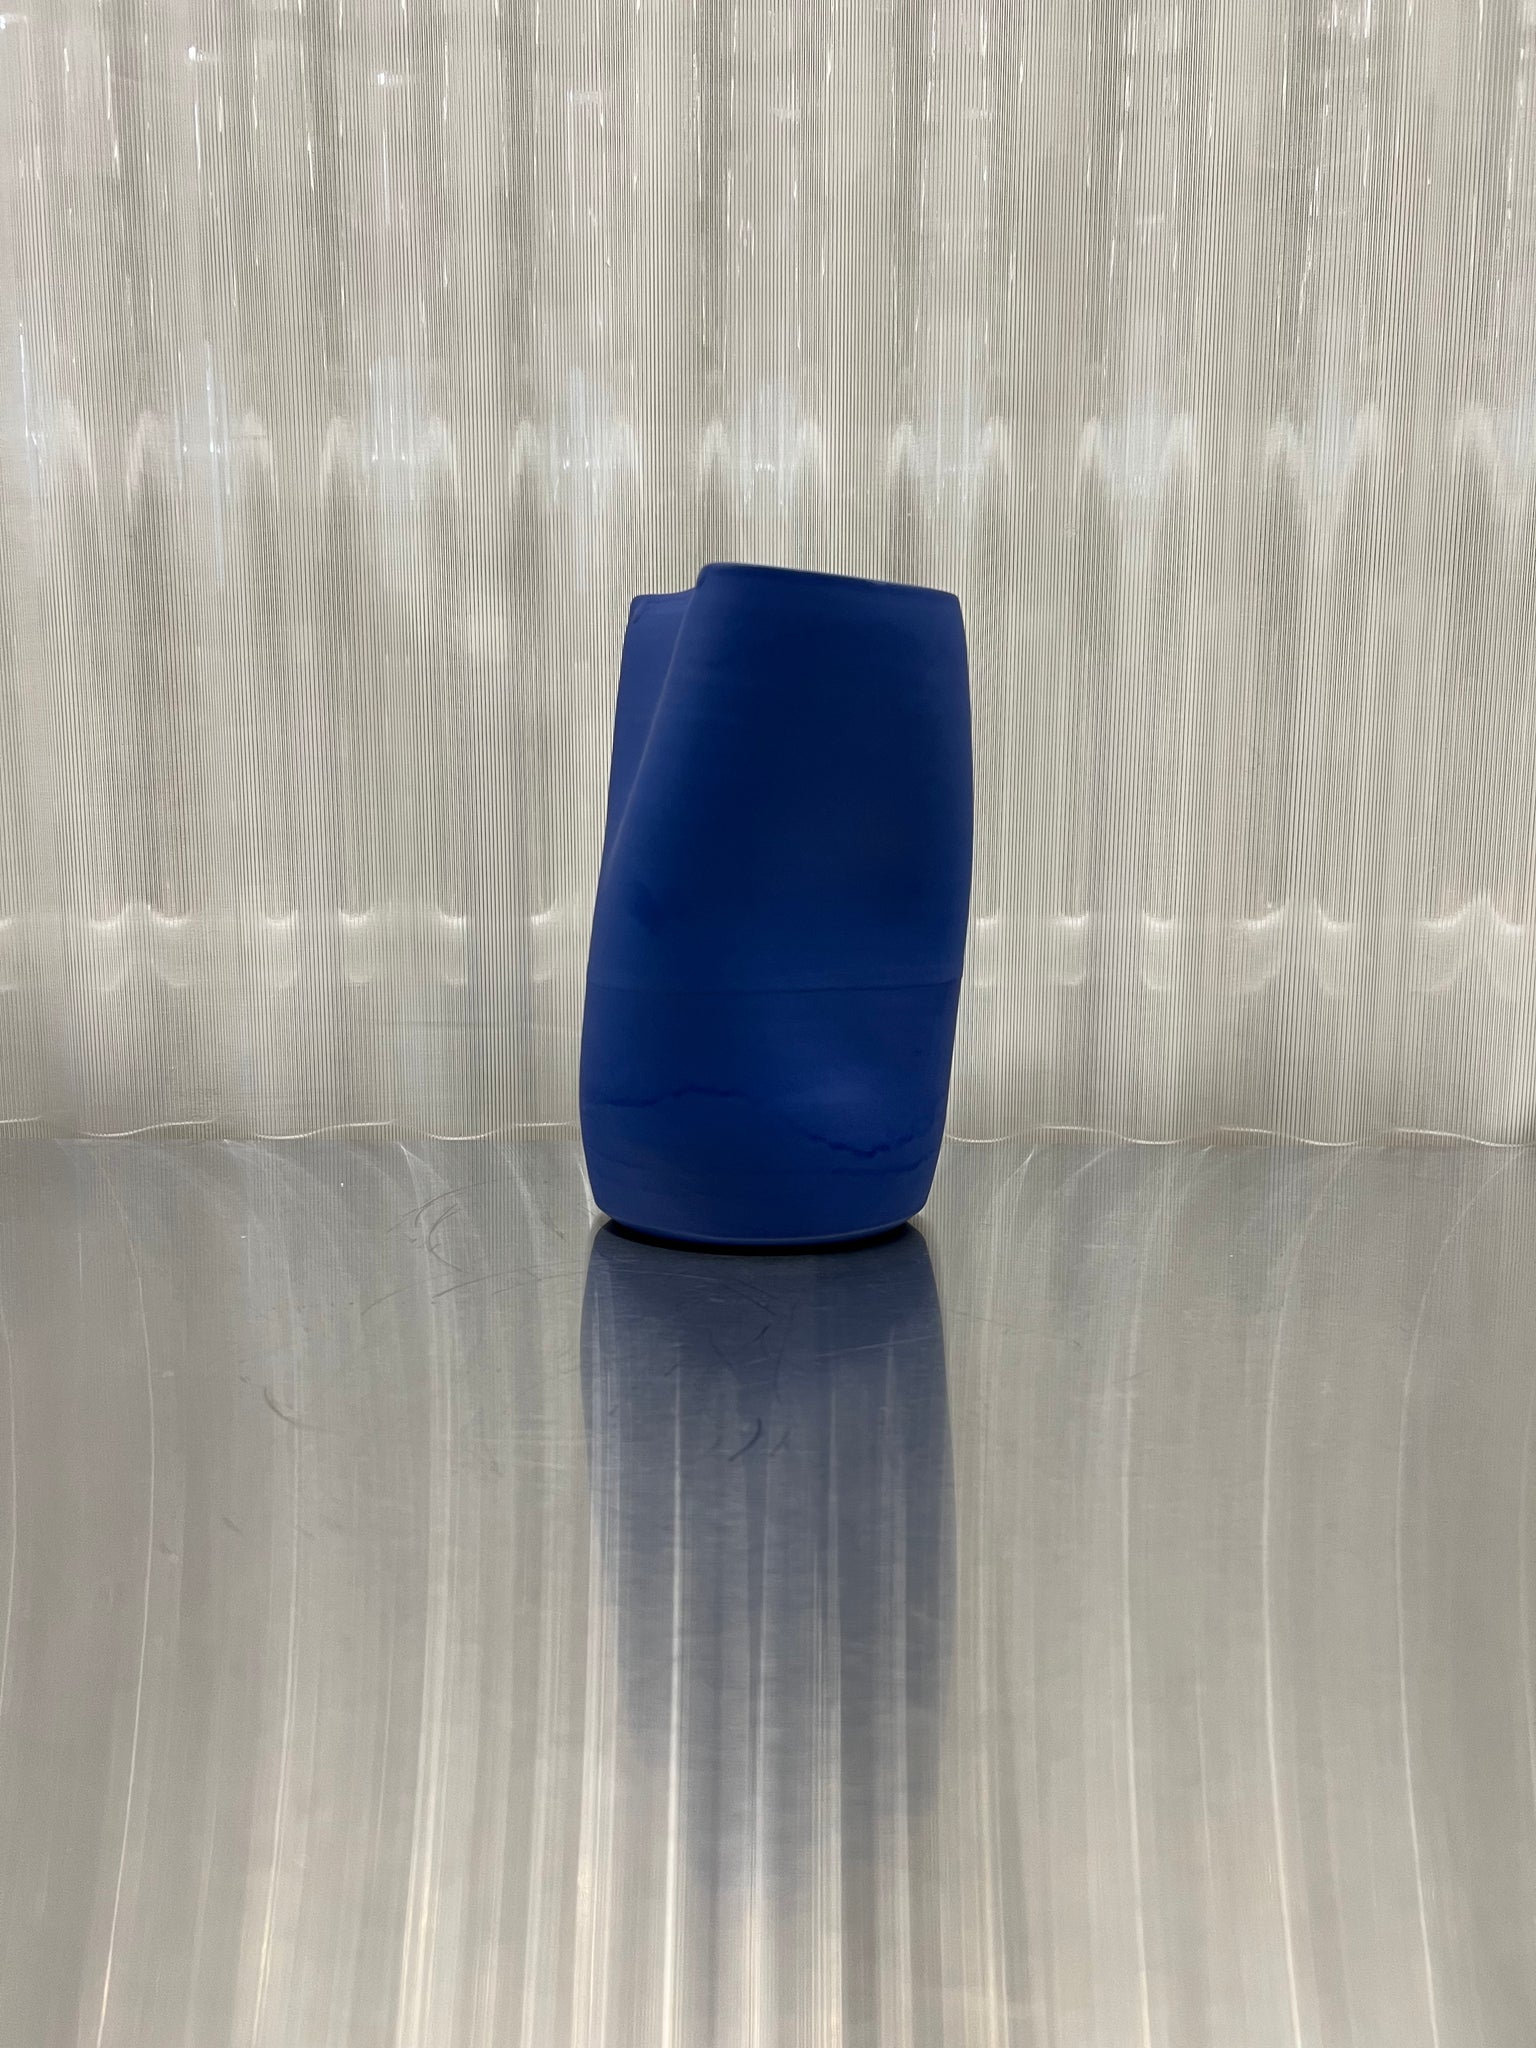 Deformed vase medium in blue by Hap Ceramics